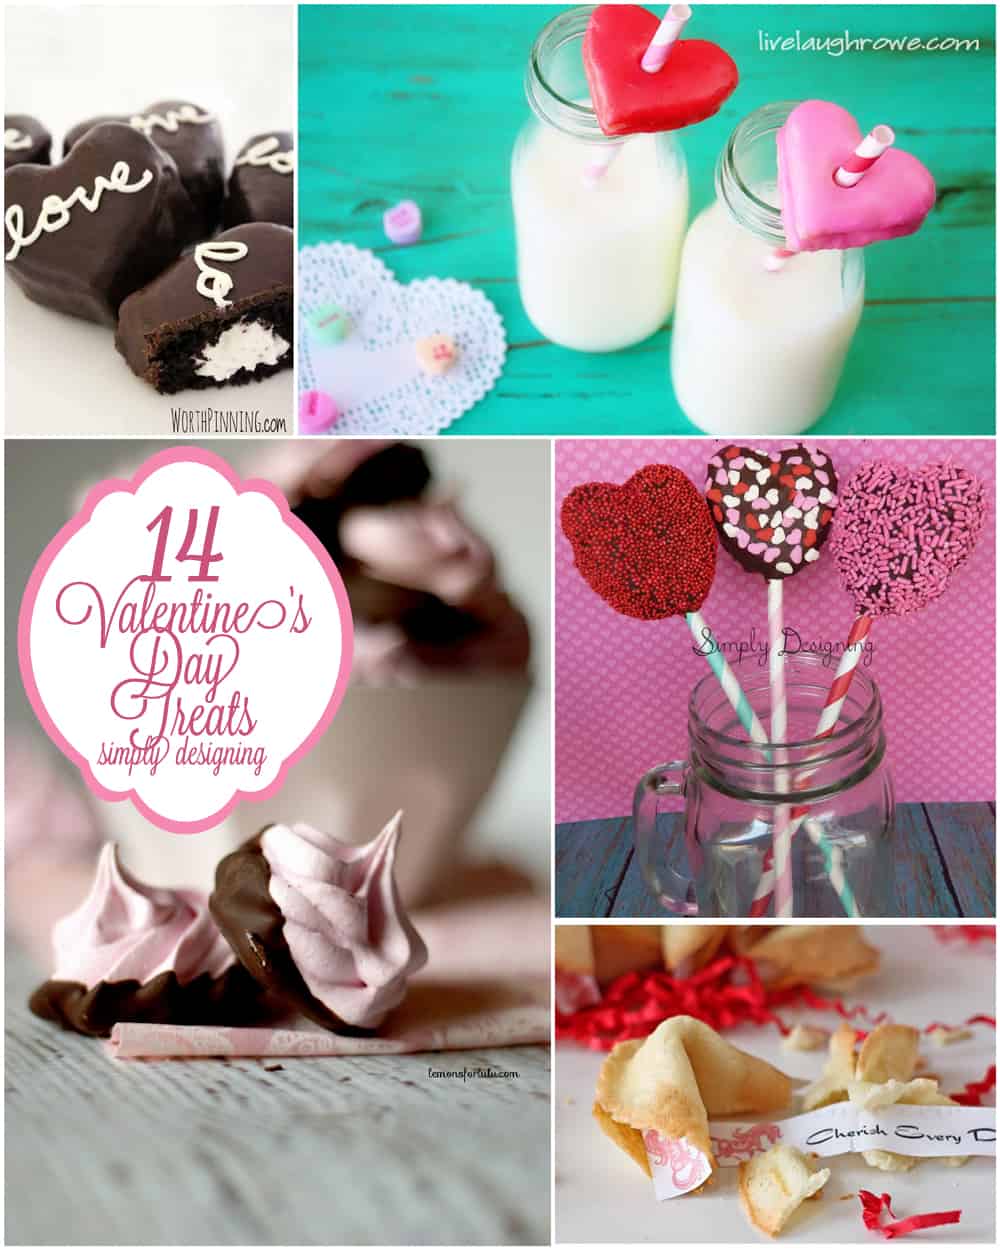 14+Vday+Treats+collage1 14 Valentine's Day Treats 10